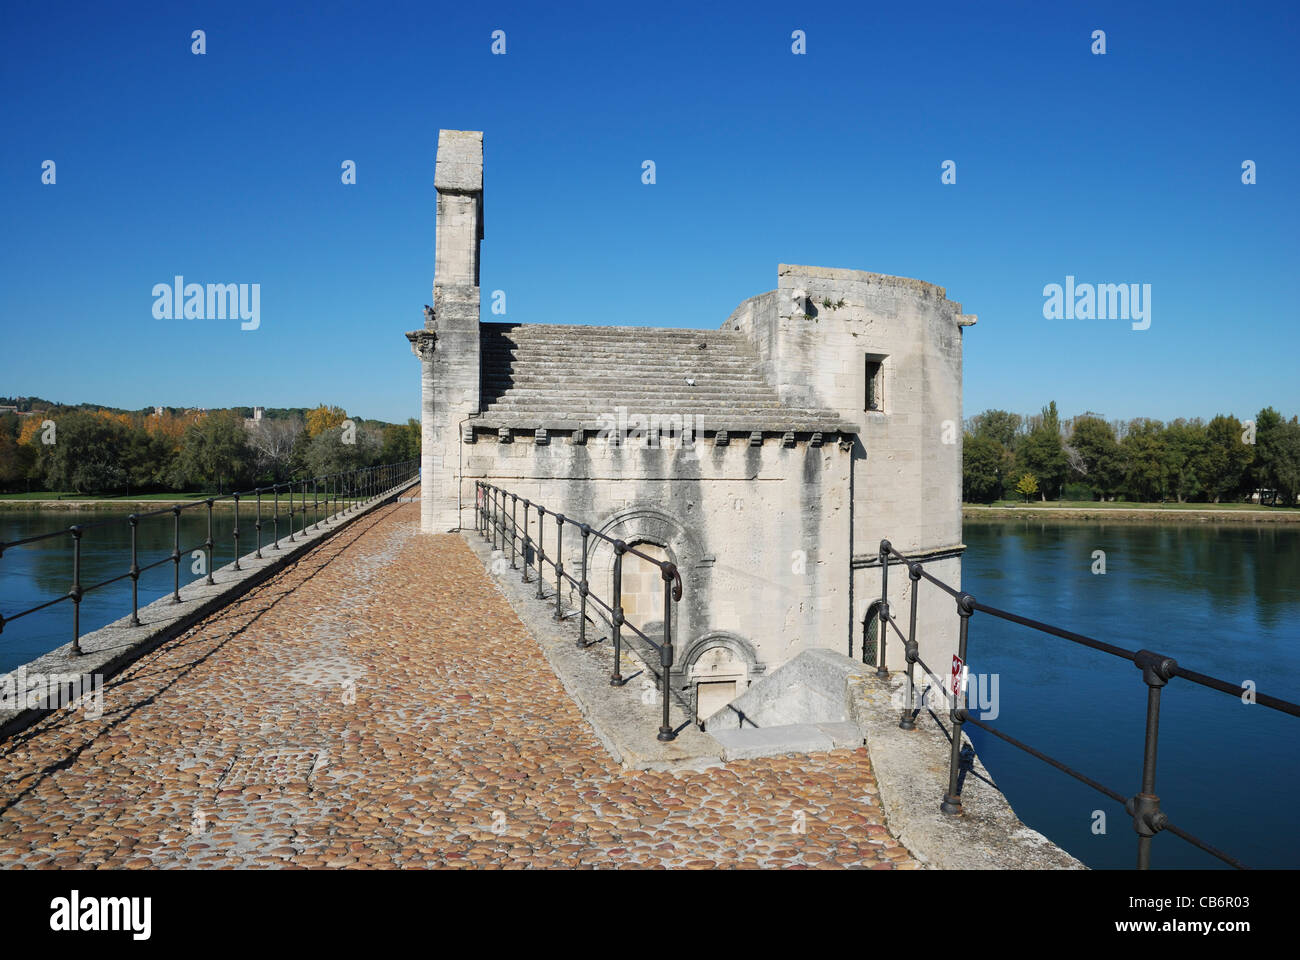 Grimaud  Avignon et Provence